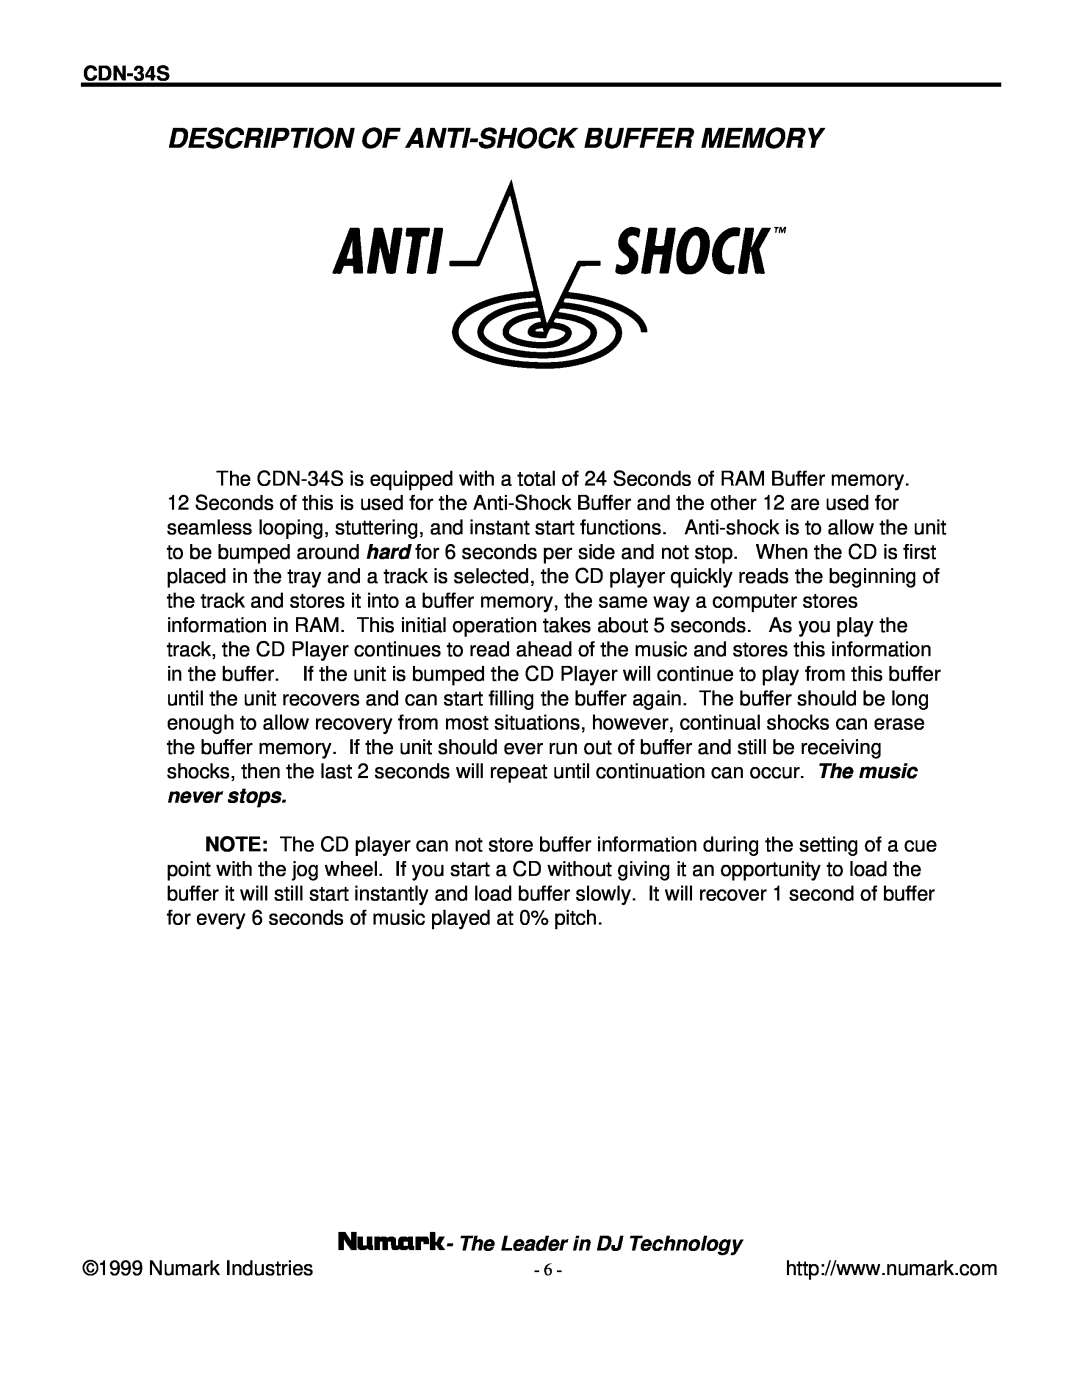 Numark Industries CDN-34S manual Description Of Anti-Shockbuffer Memory, The Leader in DJ Technology 